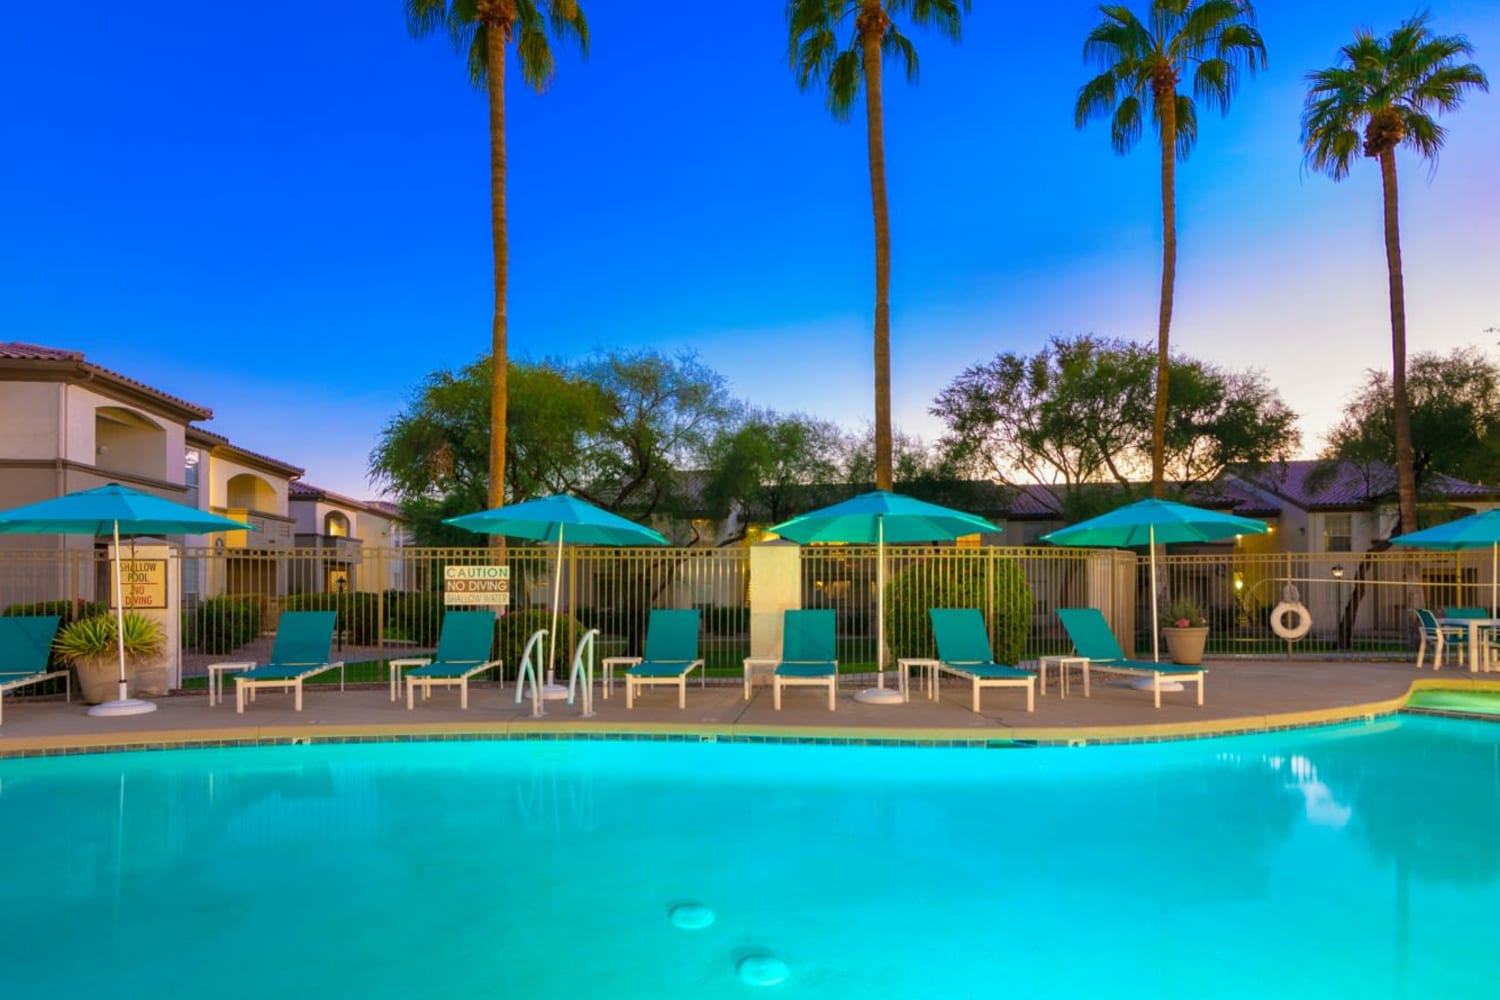 Ocotillo Bay Apartments in Chandler, Arizona outdoor pool